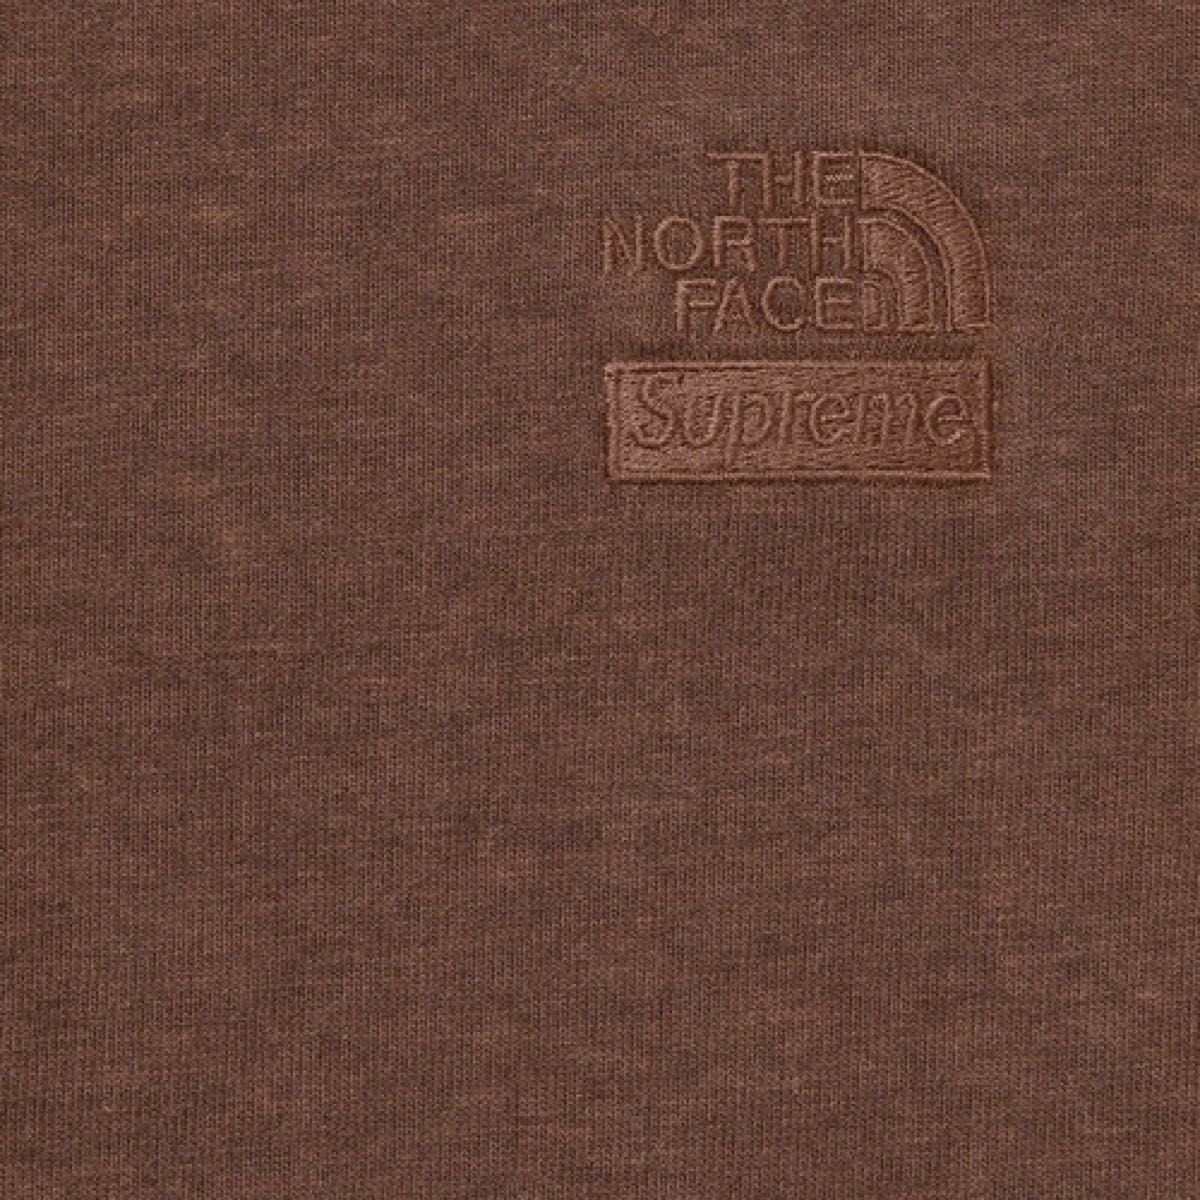 Supreme/The North Face  Pigment Printed L/S Top